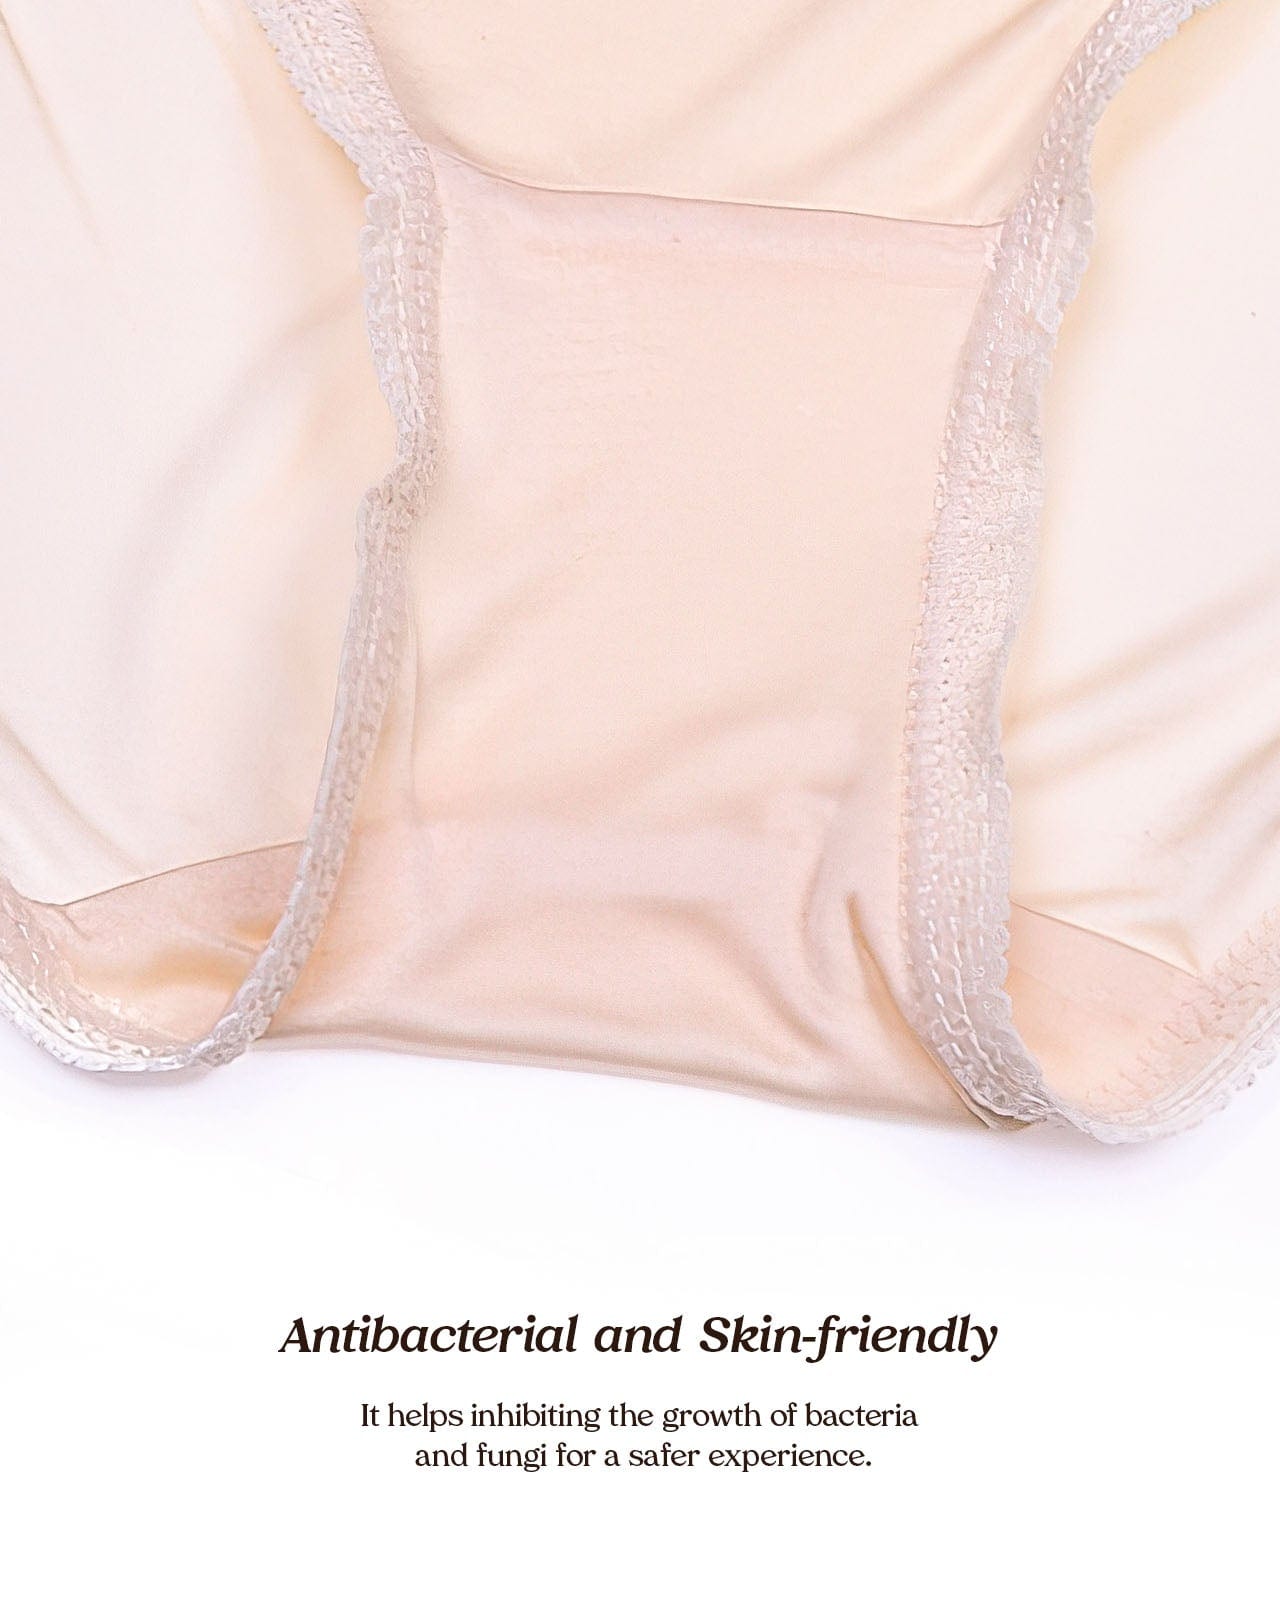 FEELITS 100% Royal Mulberry Silk. Extreme Comfort Silk Knitted Bikini Underwear  For Women